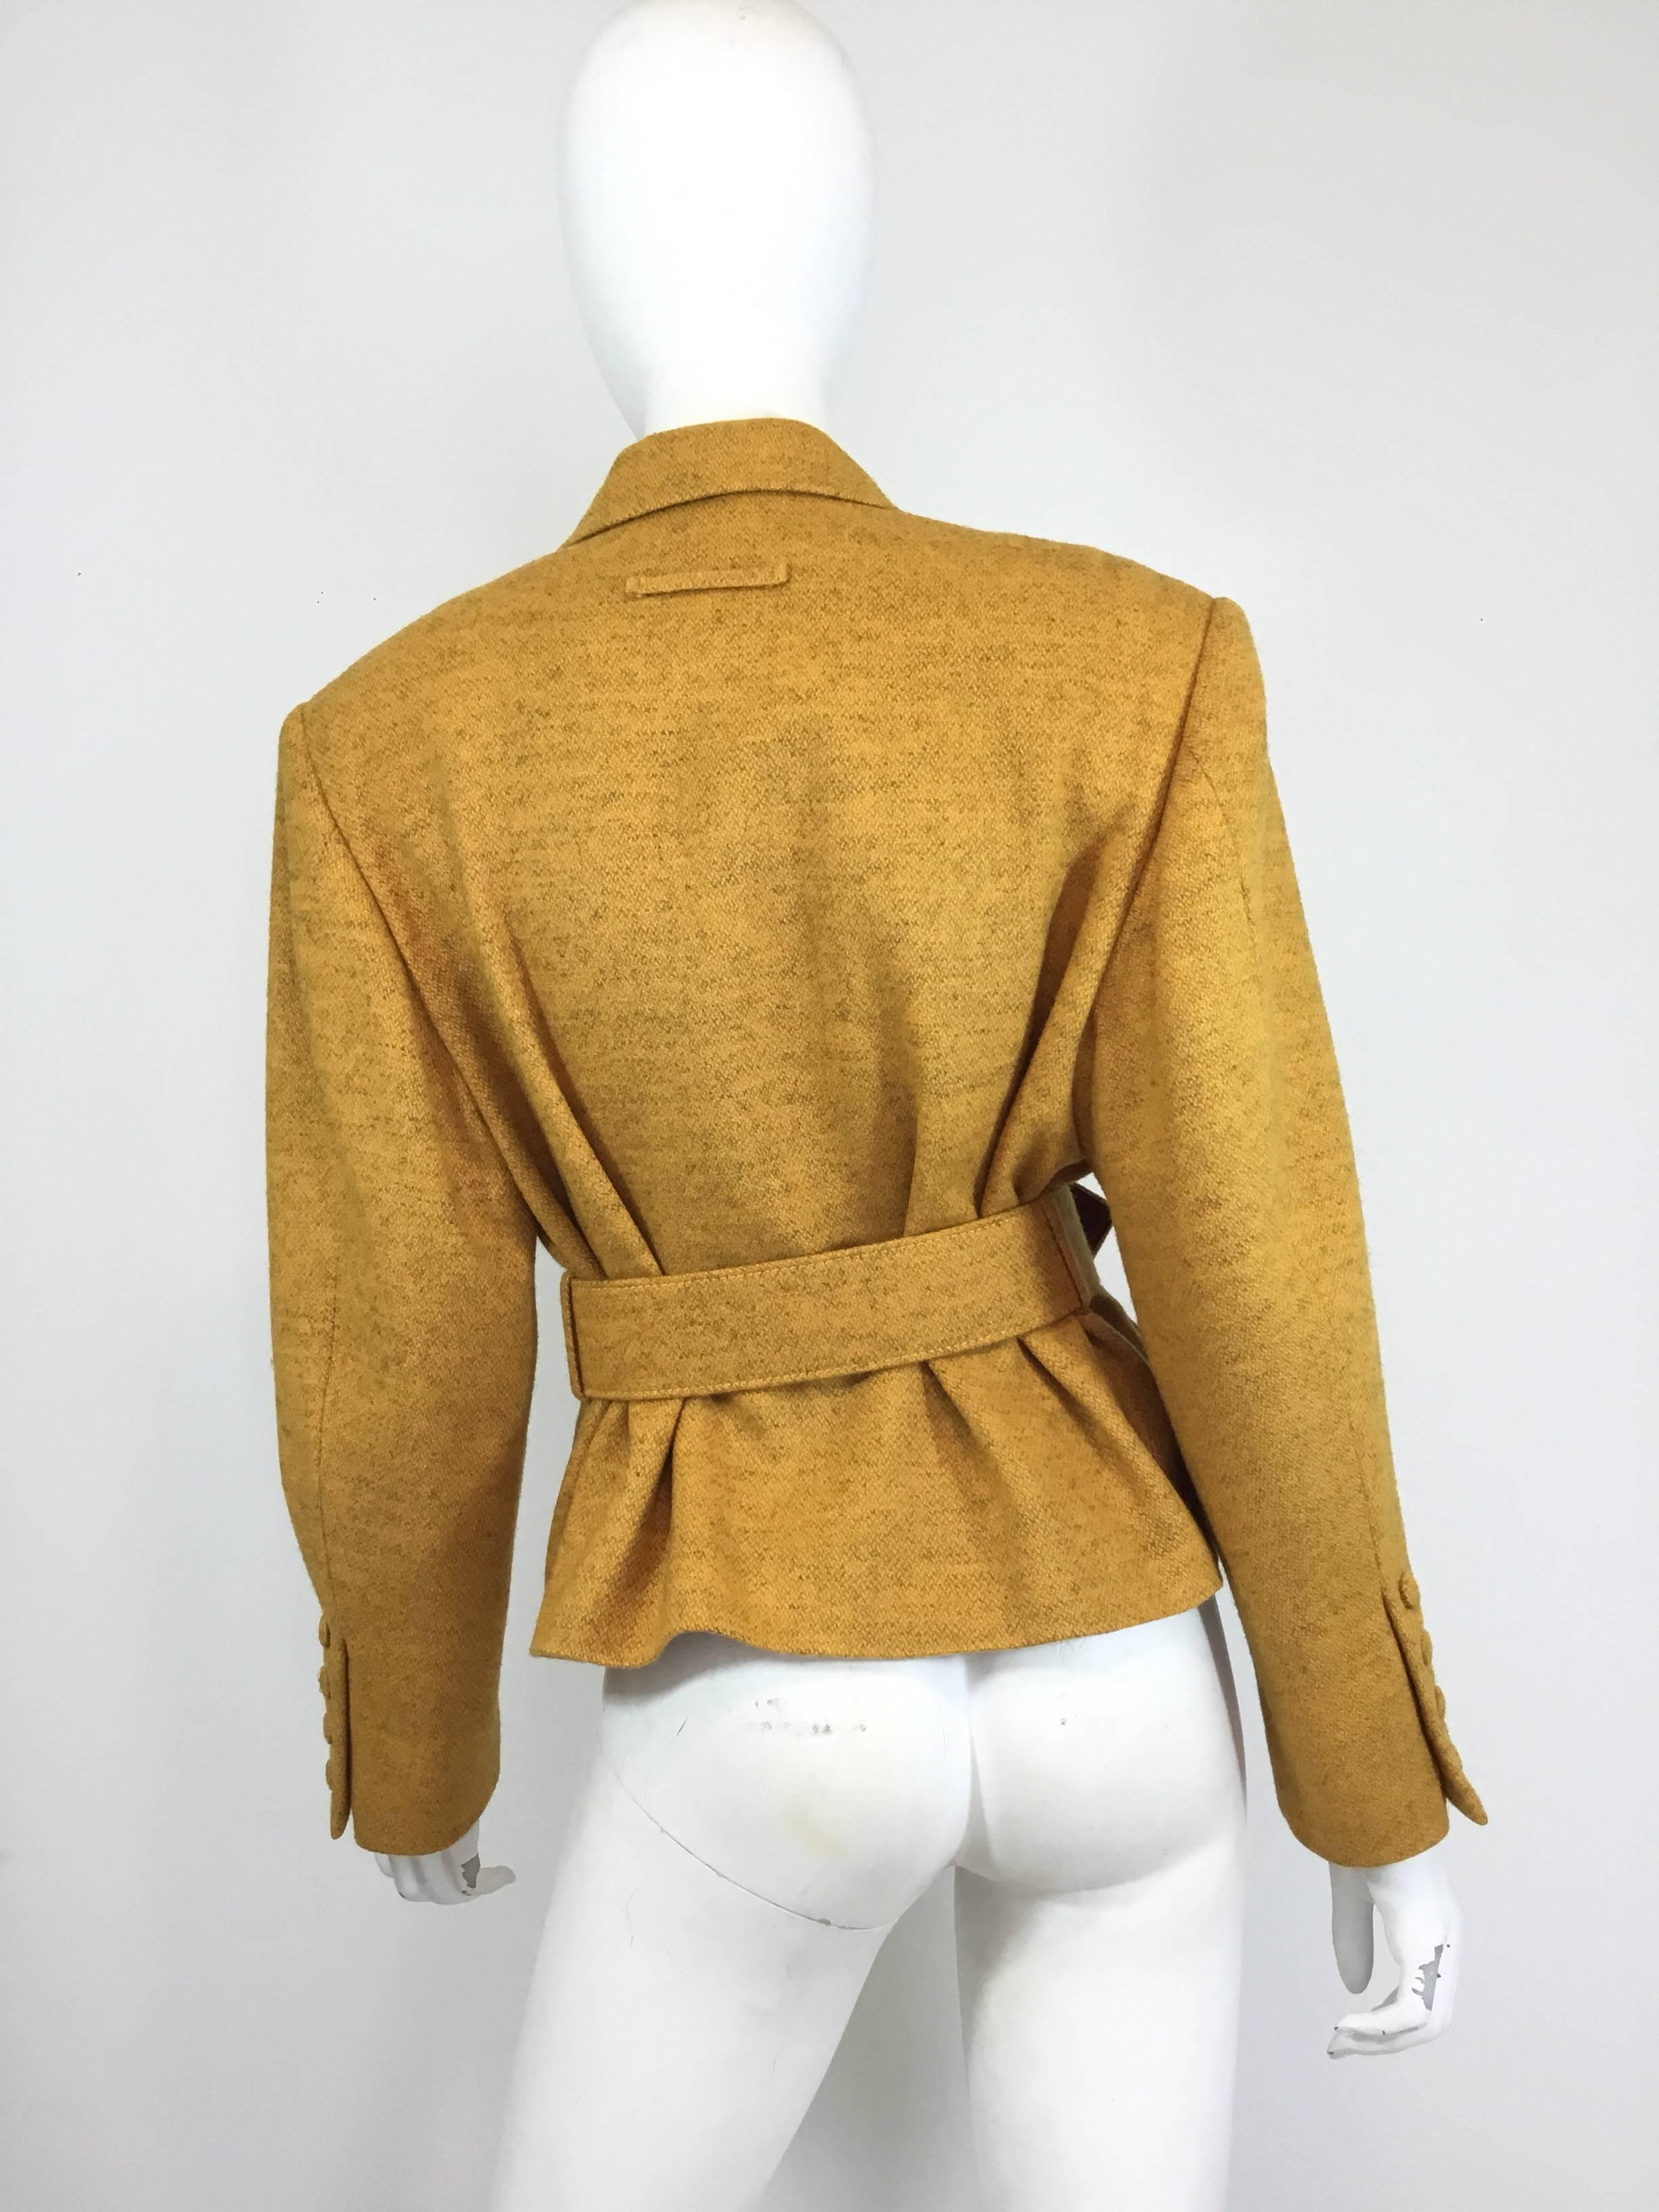 Brown Jean Paul Gaultier Wool Belted Jacket